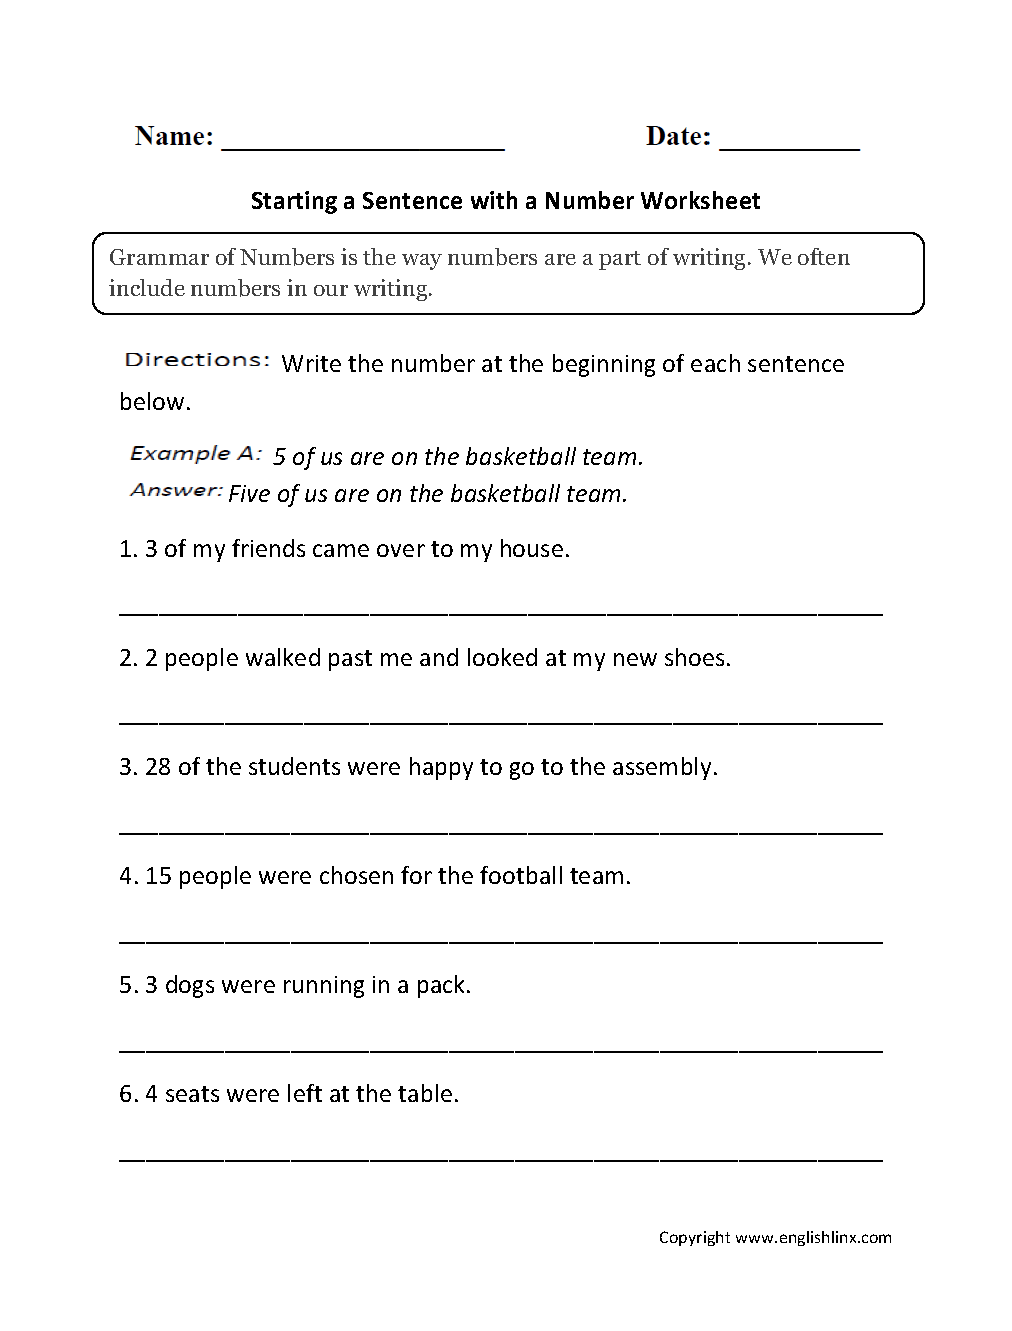 free-worksheet-7th-grade-grammar-worksheets-phinixi-worksheets